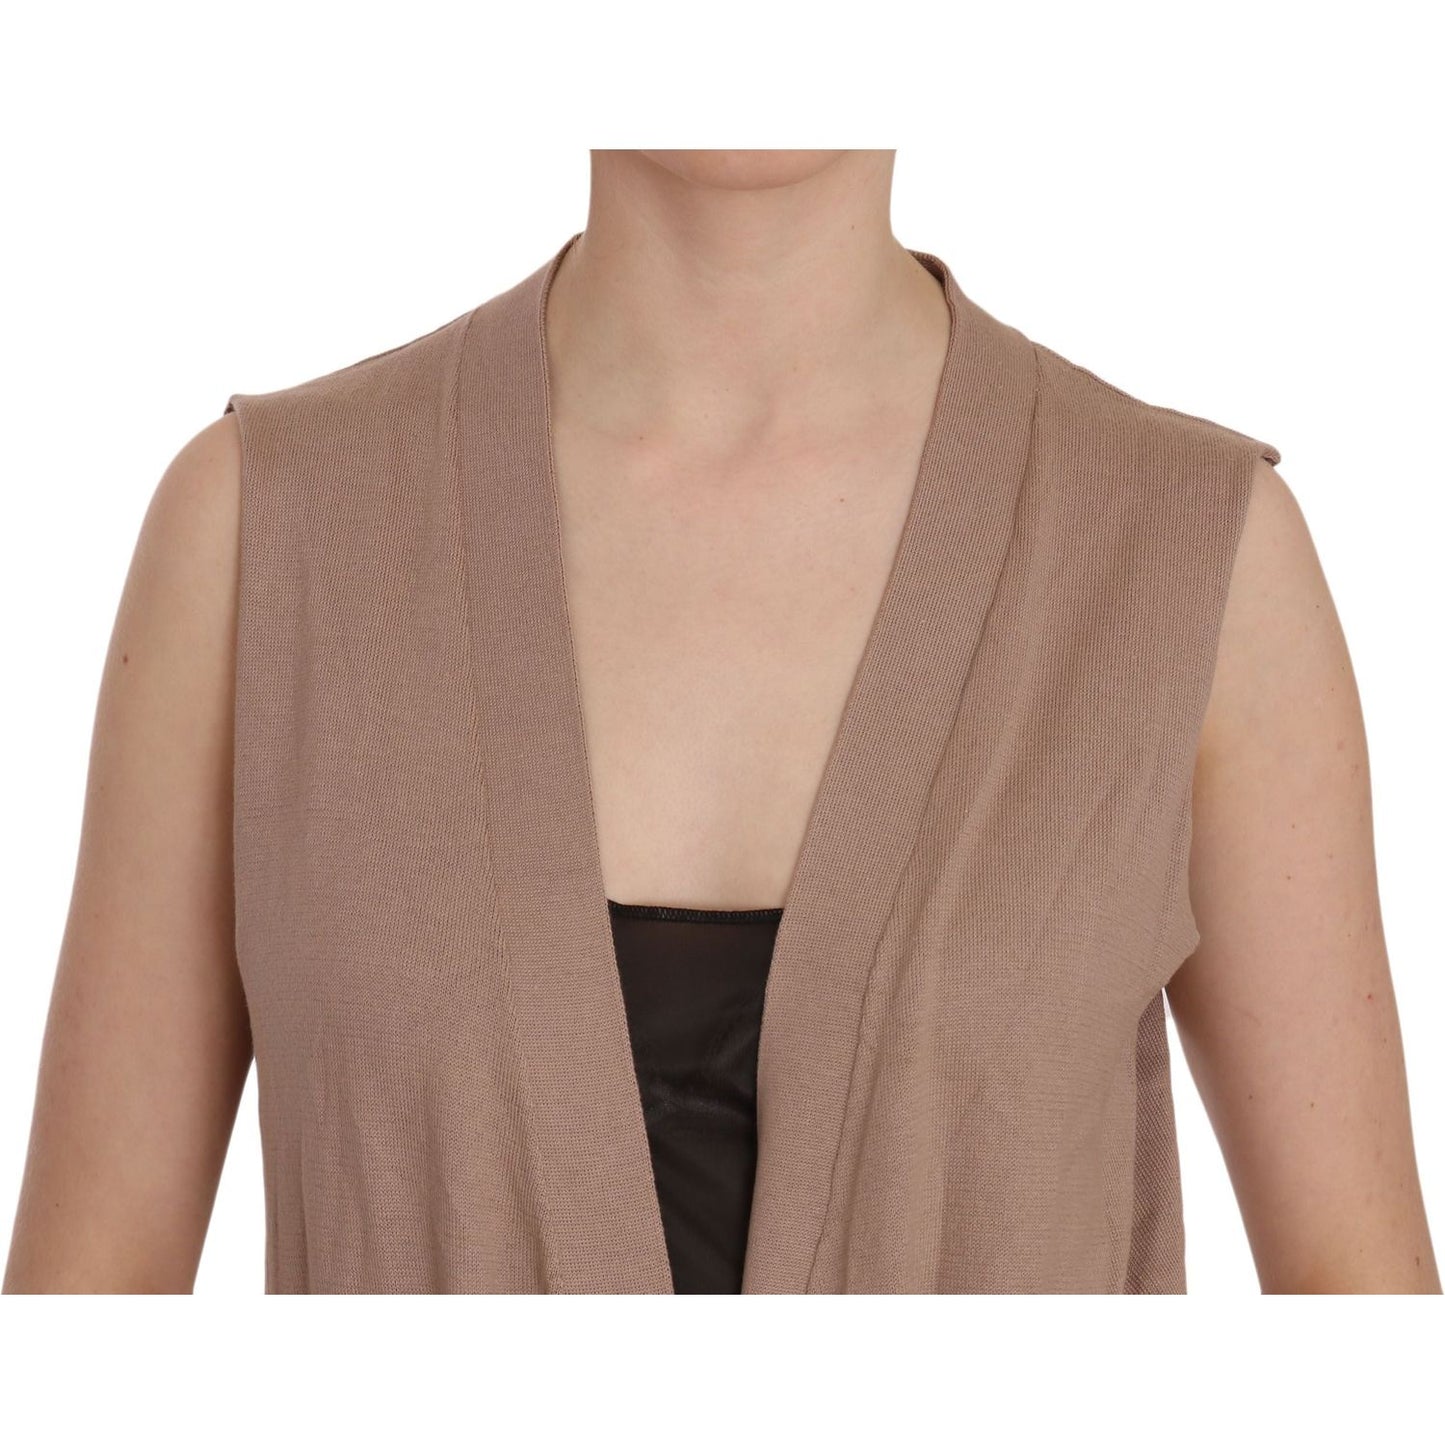 PINK MEMORIES Chic Sleeveless Cotton Cardigan Vest - Elegant Brown brown-100-cotton-sleeveless-cardigan-top-vest-3